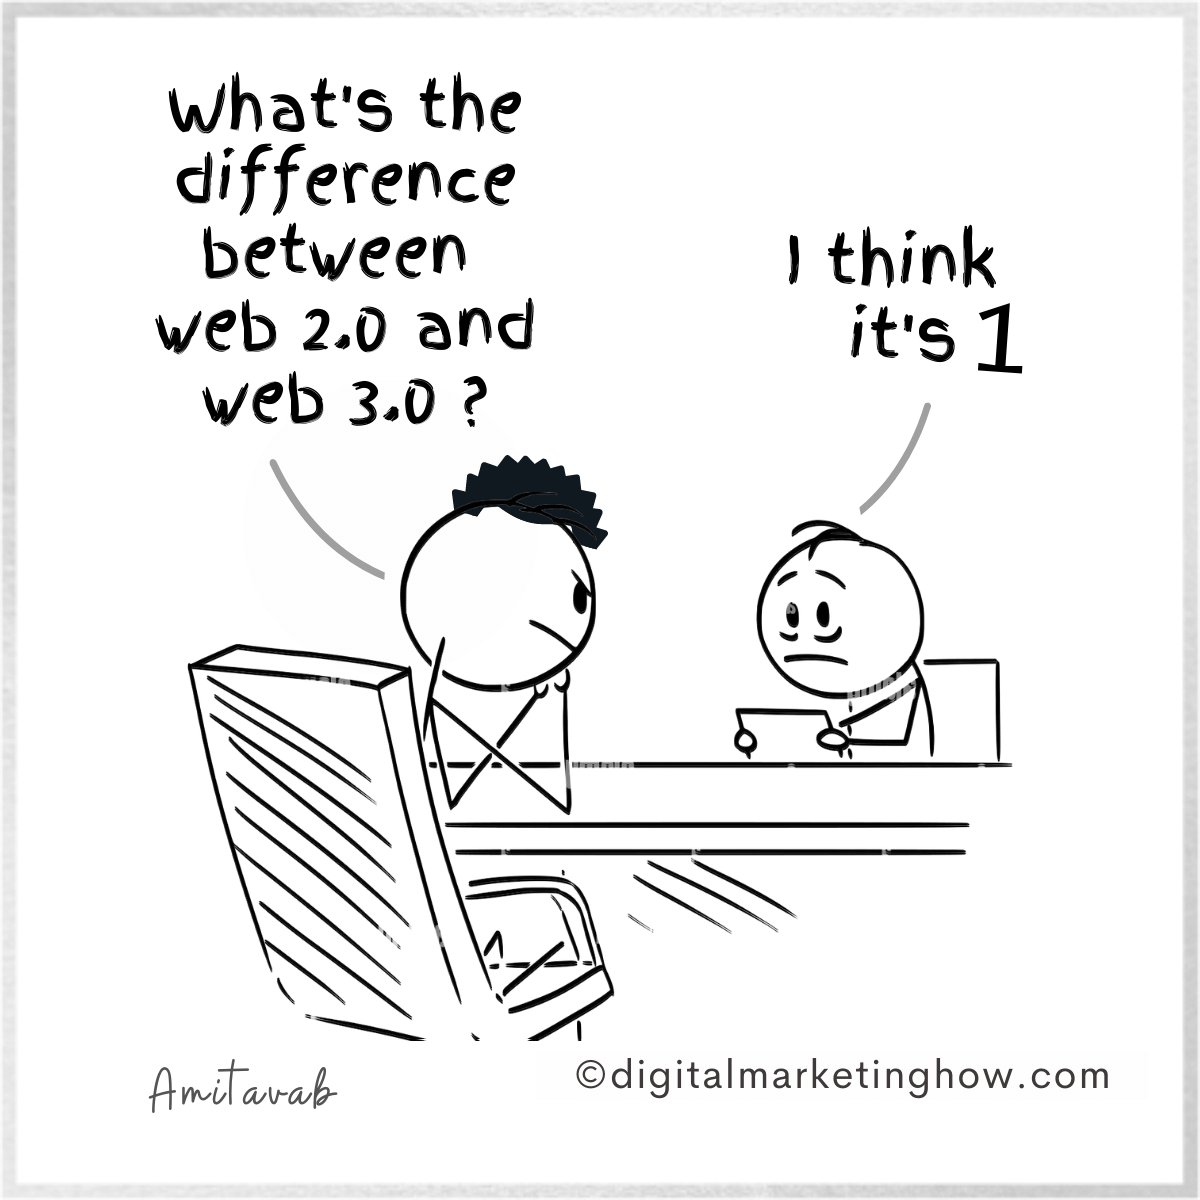 digital marketing joke cartoon on web 3 - web 2 difference